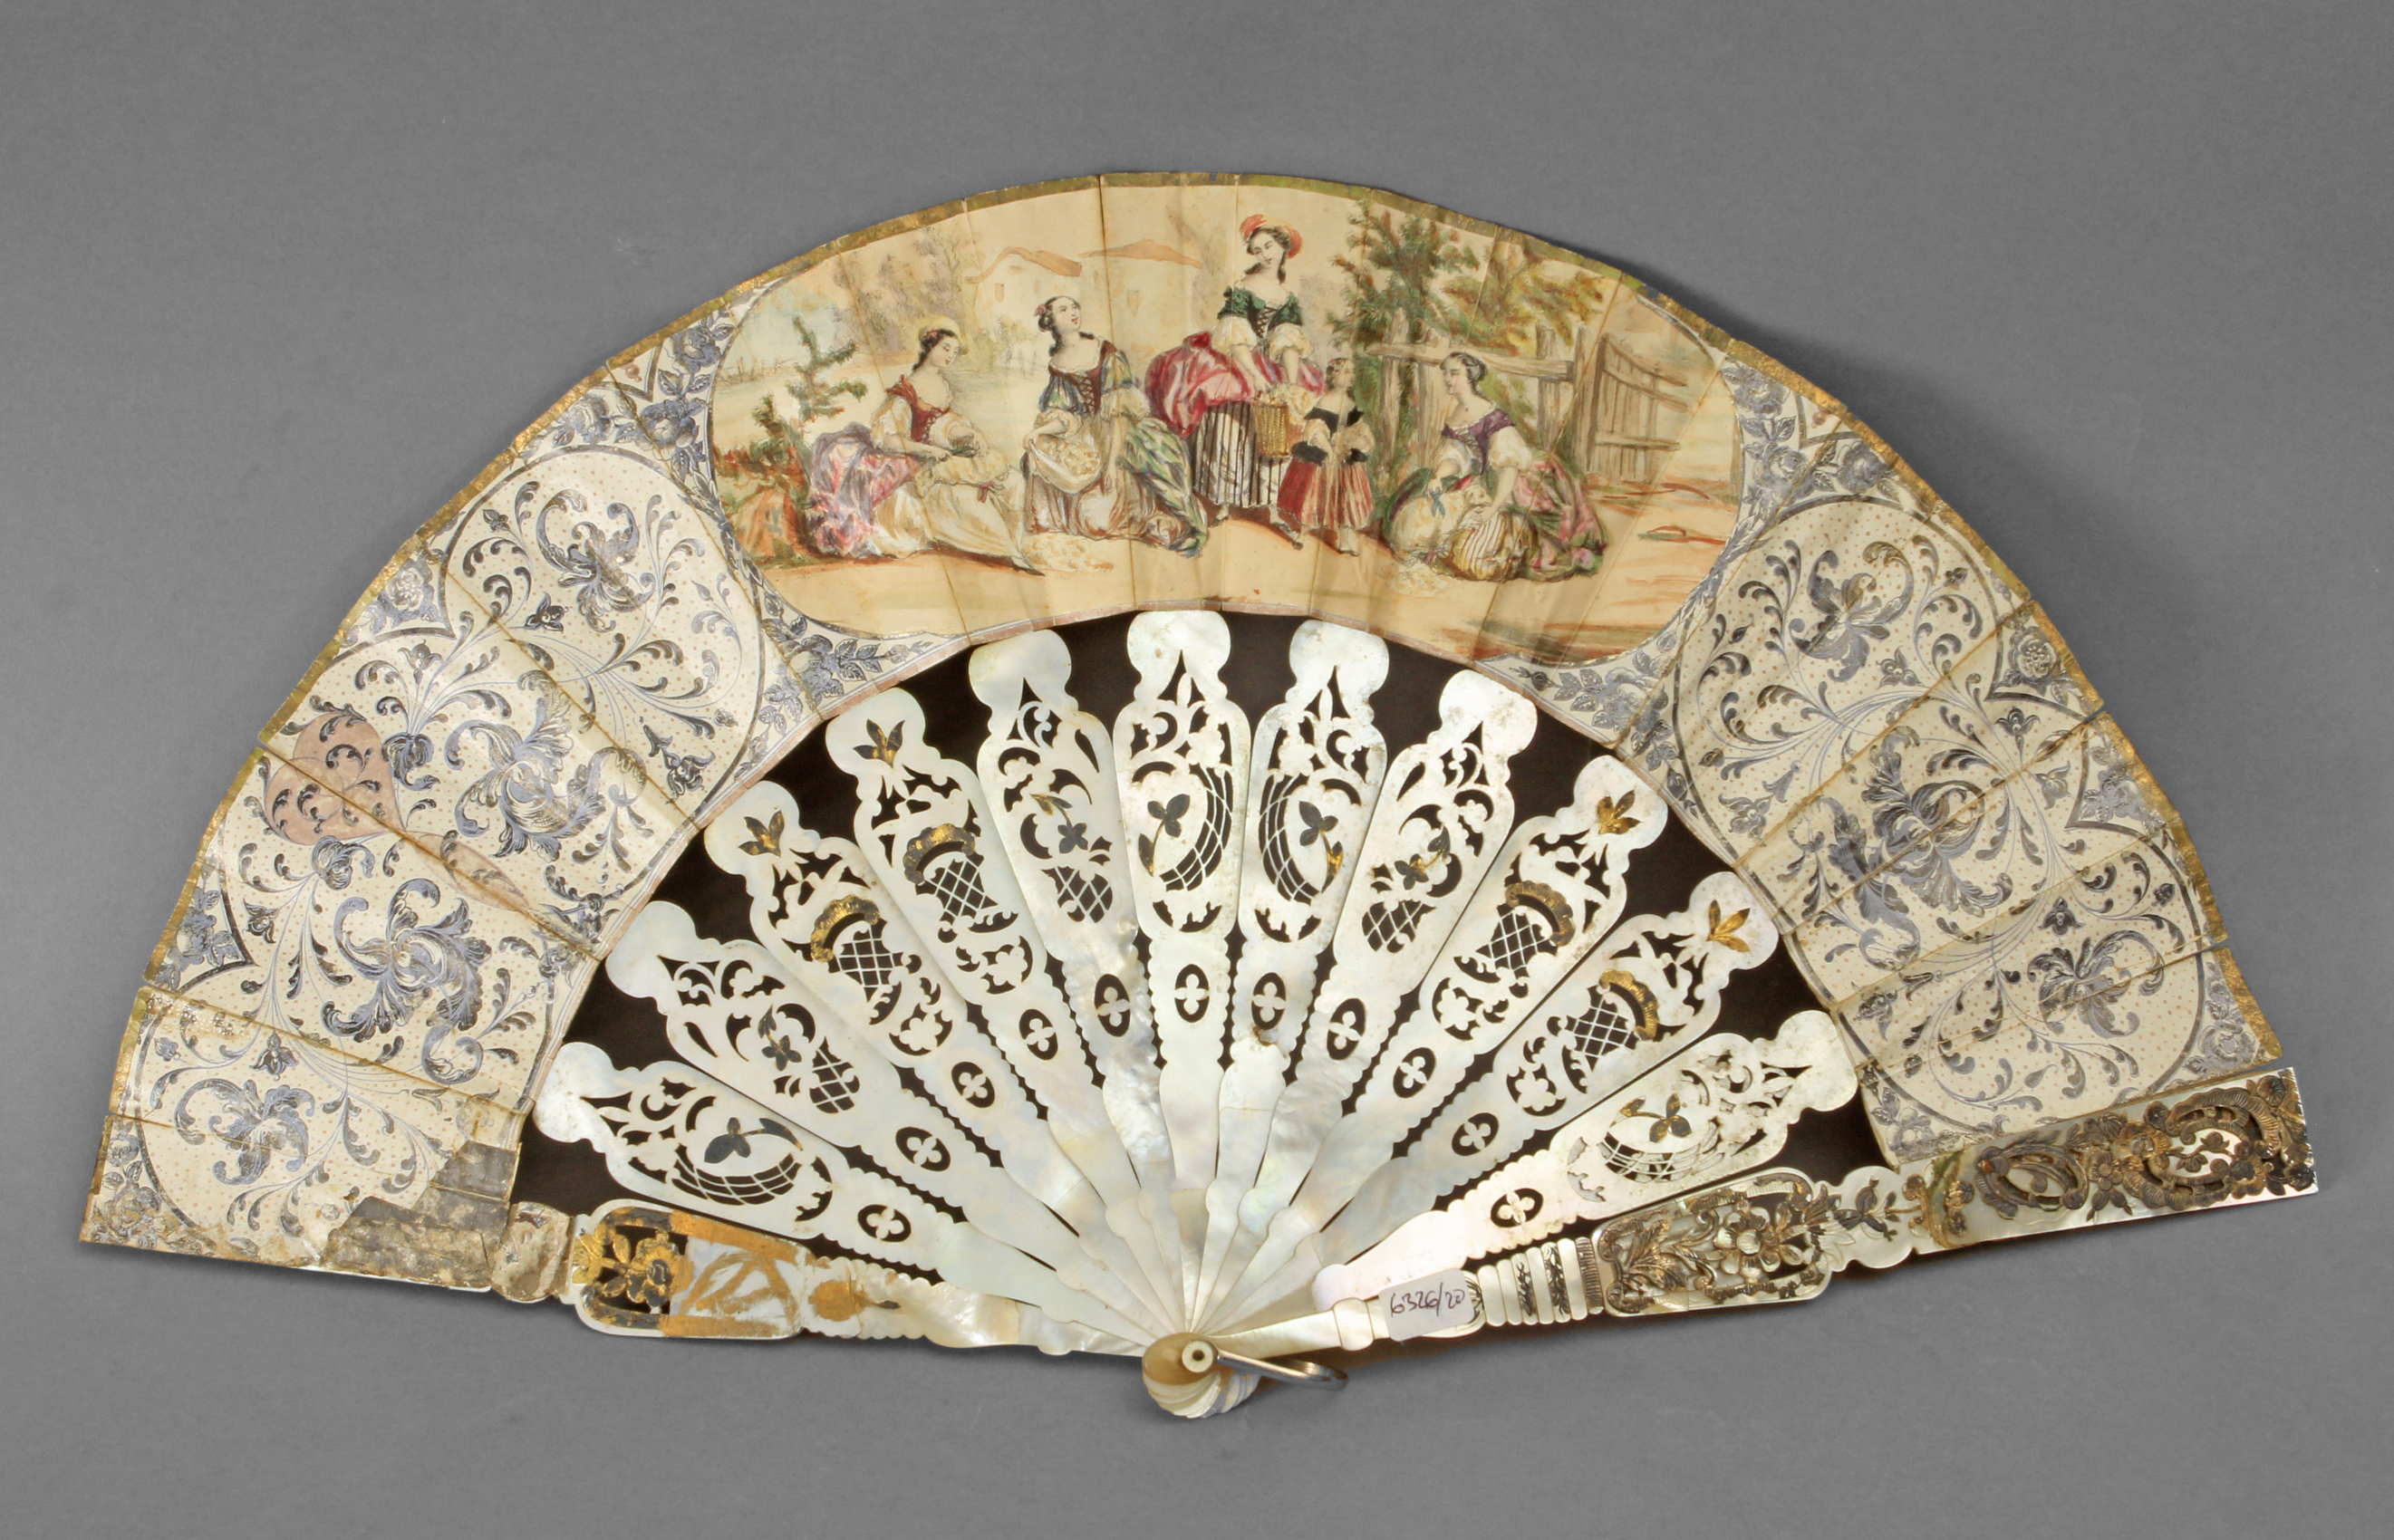 A neoclassical fan circa 1780